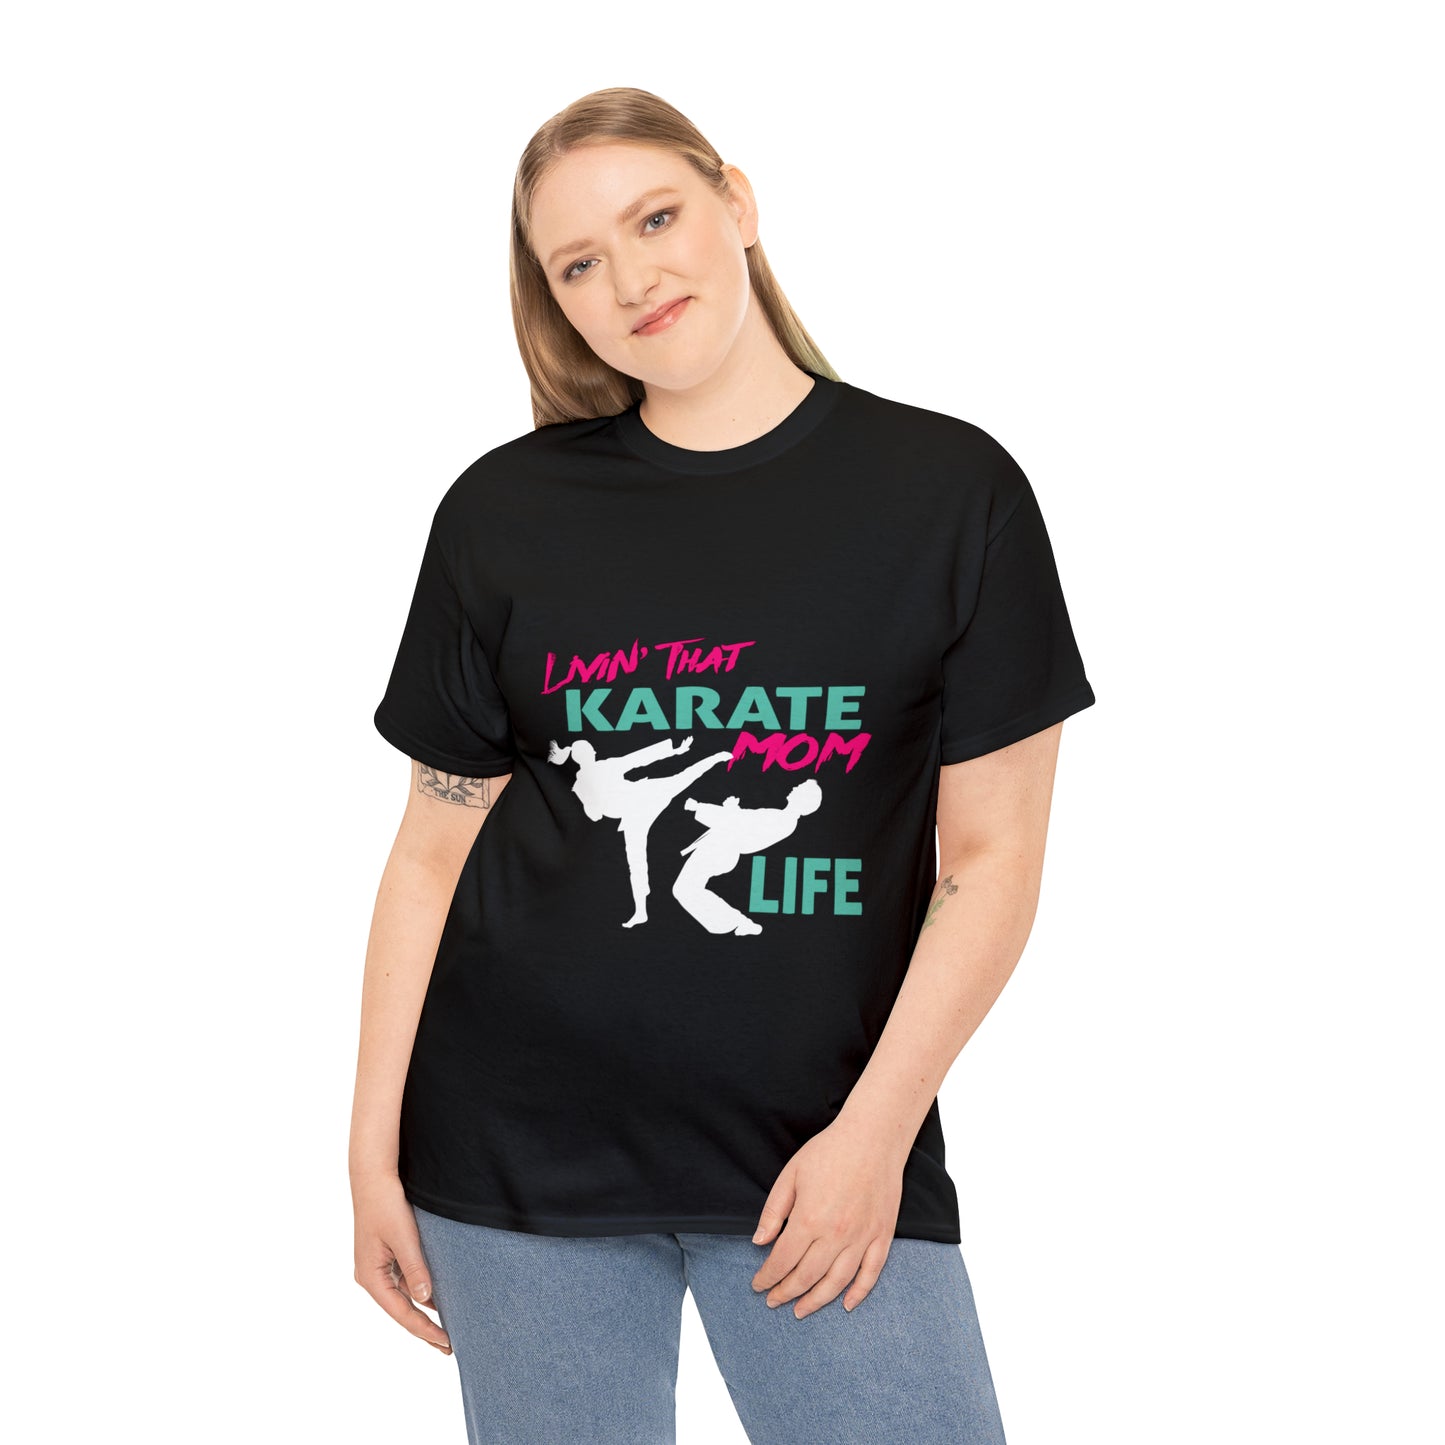 Livin' That Karate Mom Life Heavy Cotton Tee